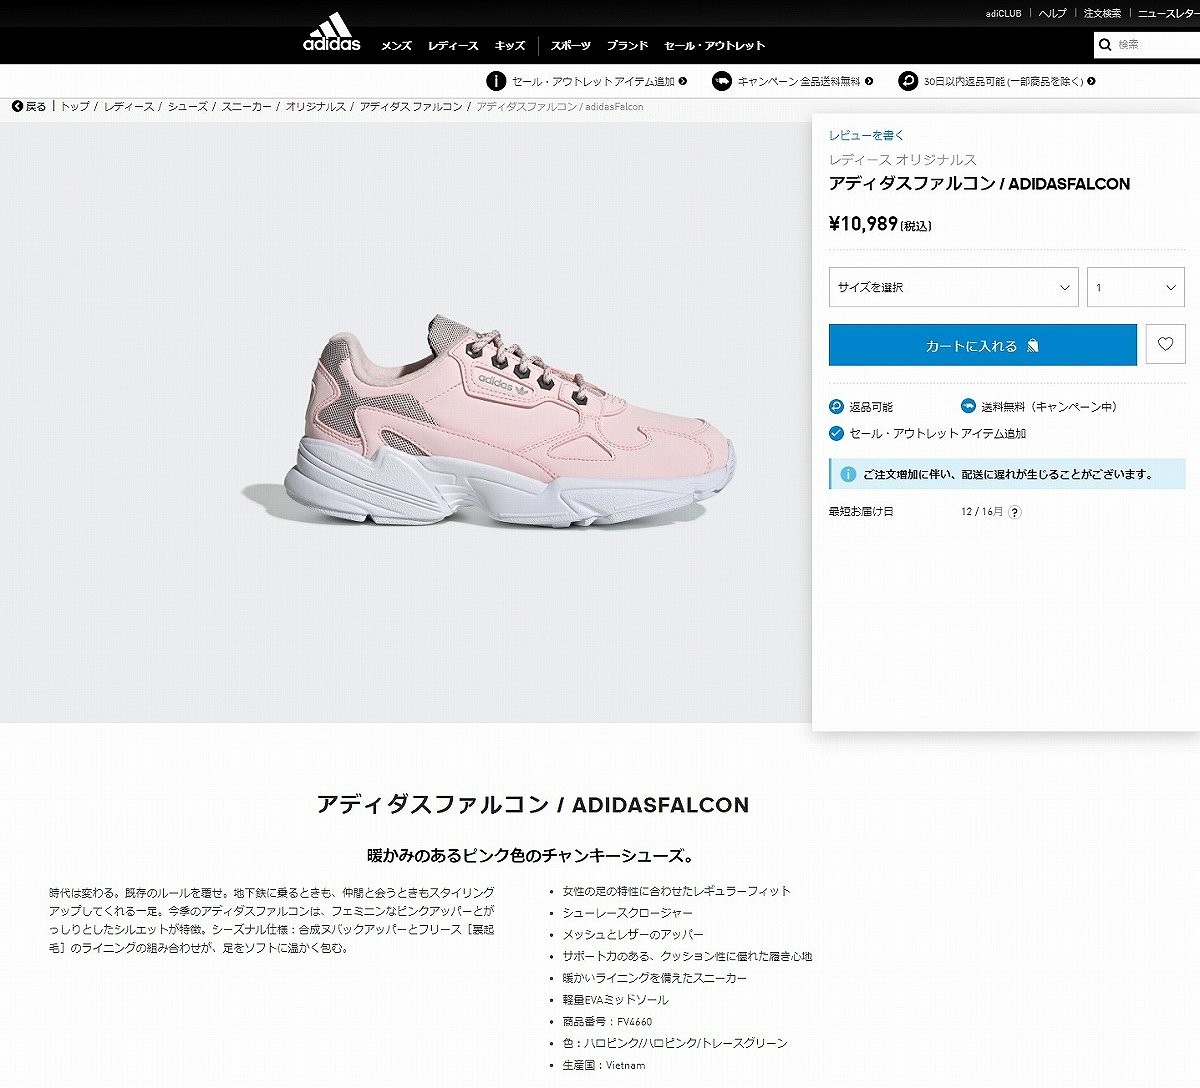 Adidas Adidasfalcon W アディダス アディダスファルコン ウィメンズ Halo Pink Halo Pink Trace Green Fv4660 Lowtex 通販 Paypayモール